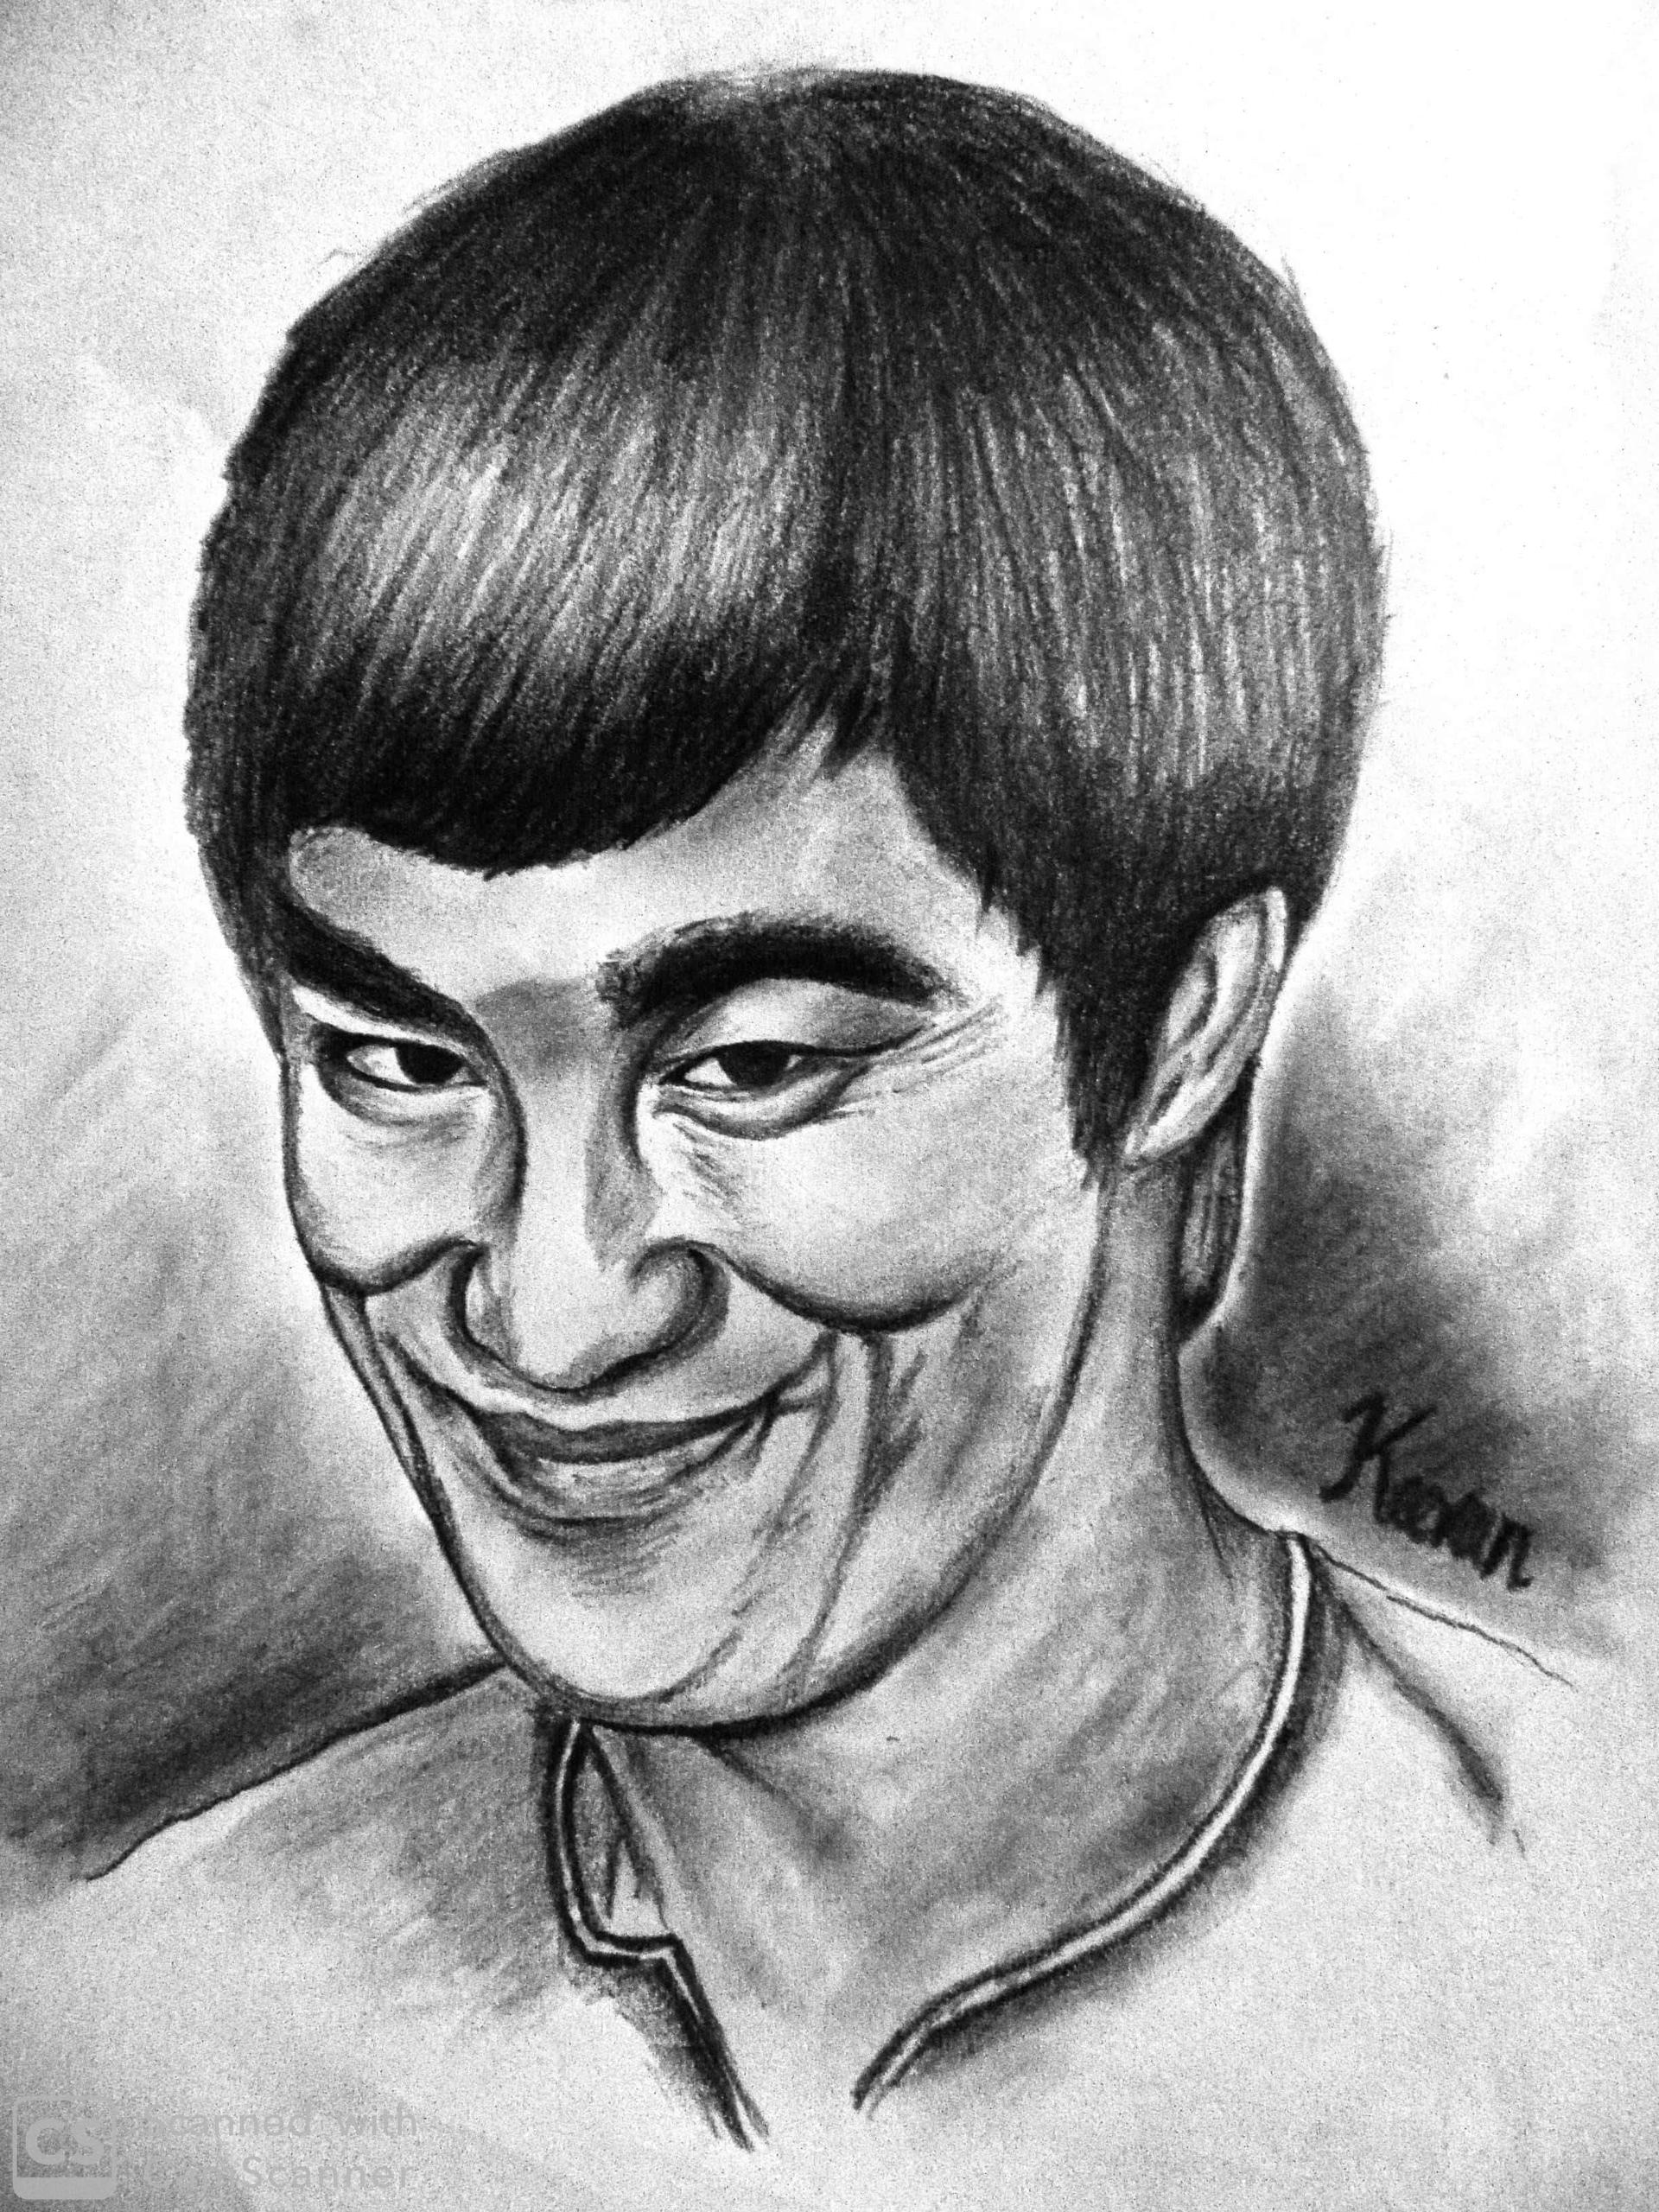 Bruce Lee : Unbeaten Legend of Martial Arts by Keeranbikash on DeviantArt